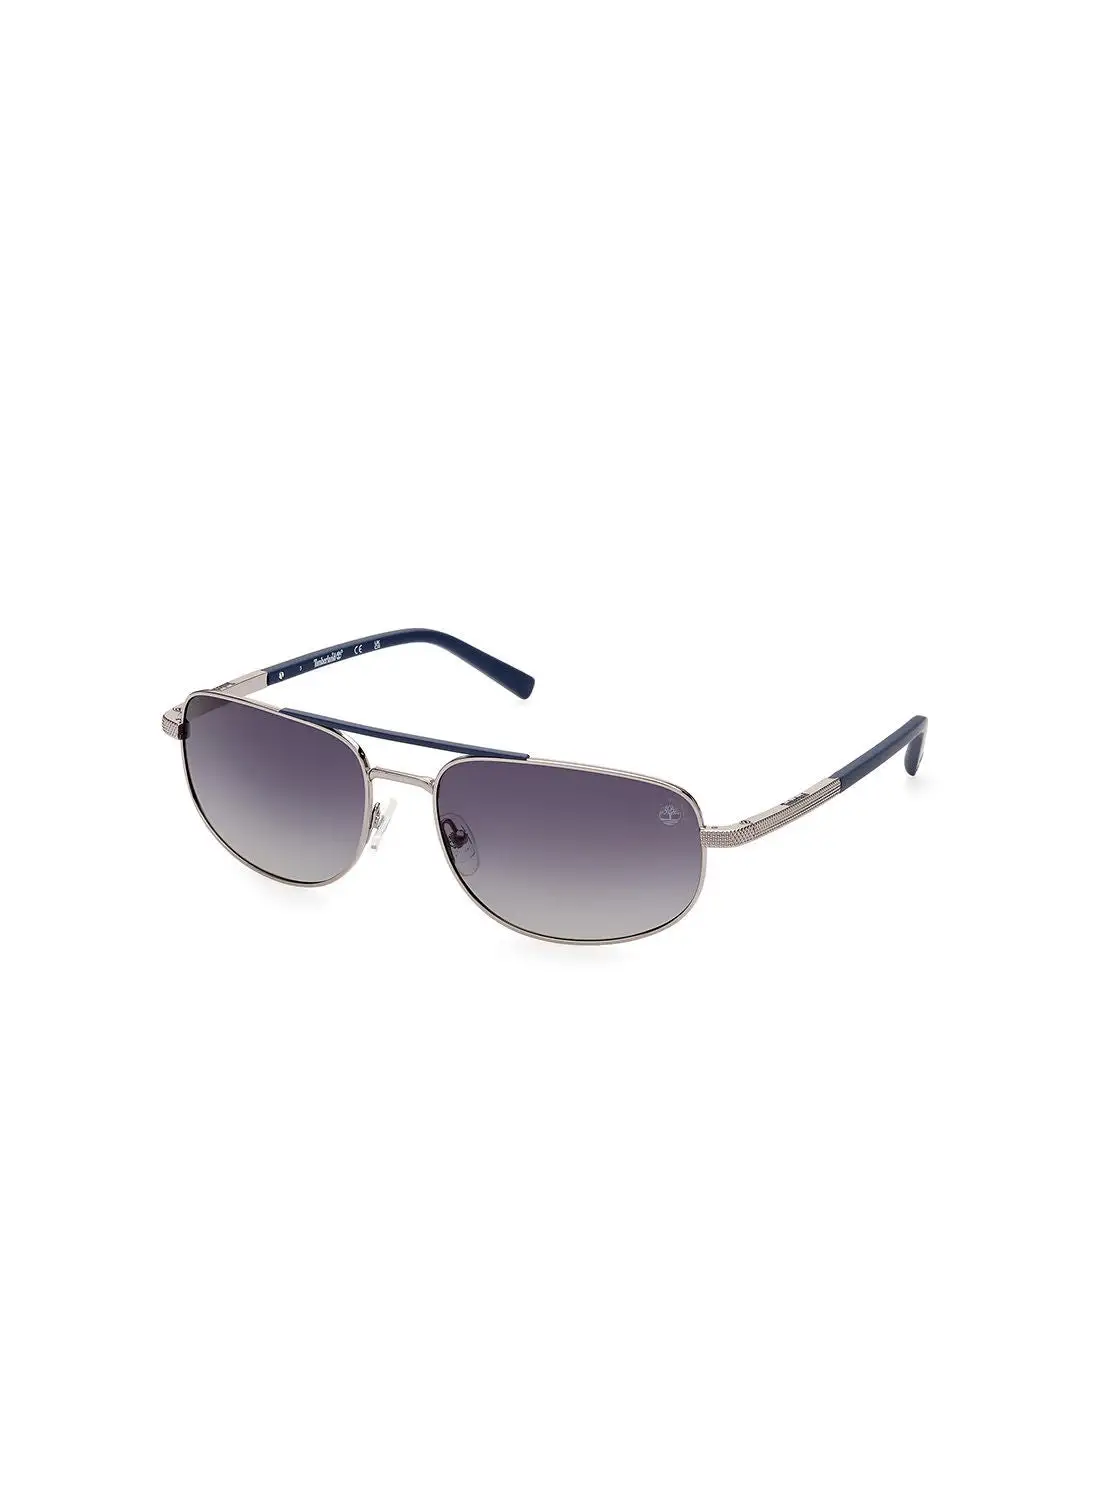 Timberland Men's Polarized Navigator Sunglasses - TB928508D61 - Lens Size: 61 Mm